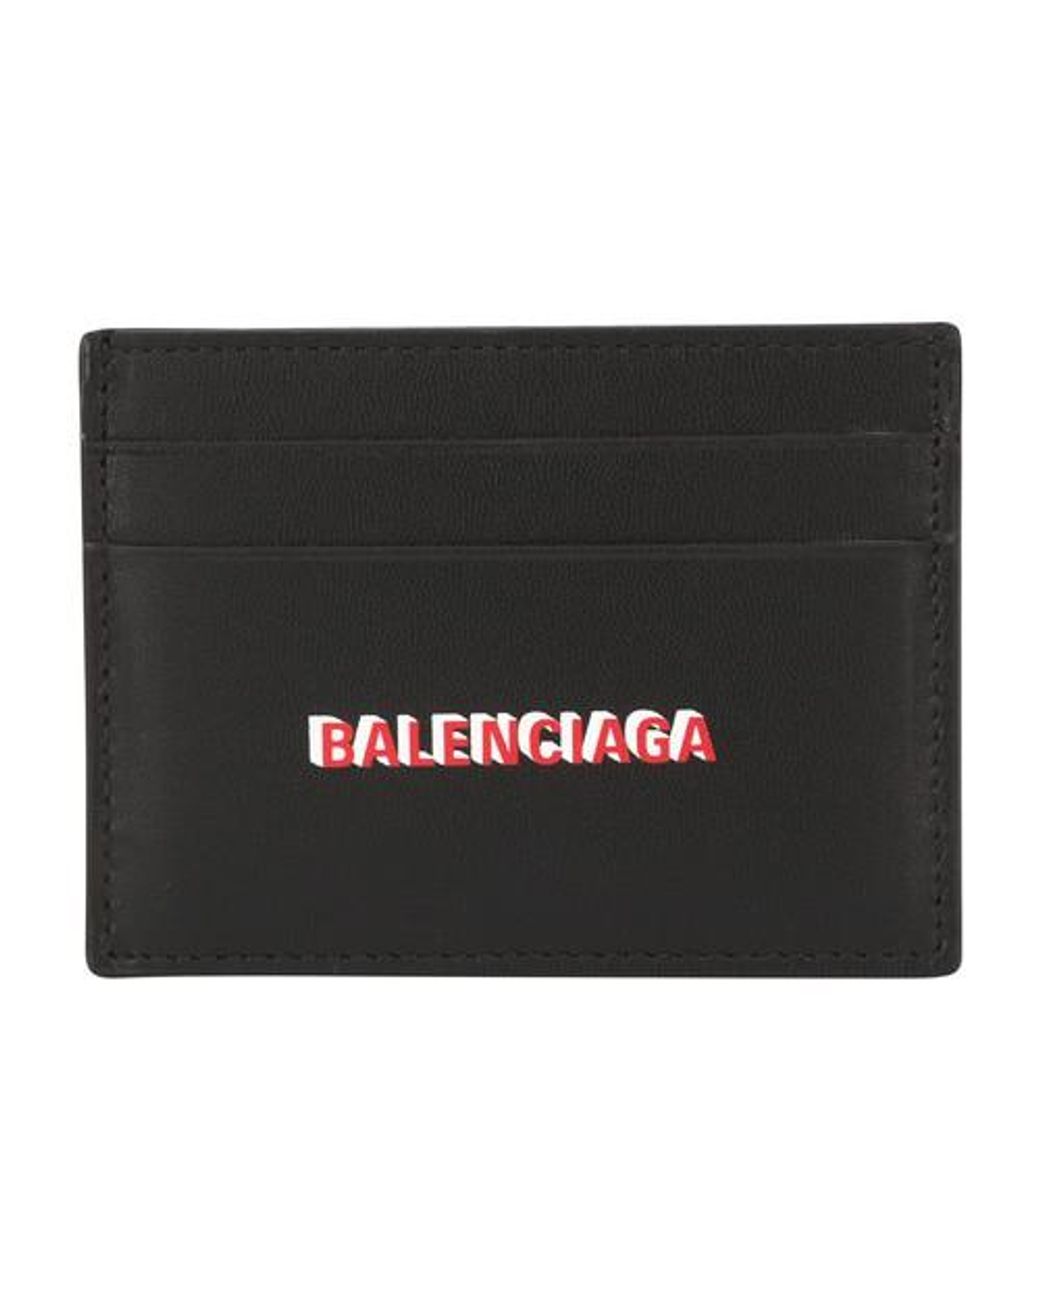 Balenciaga Leather Card Holder in Black for Men - Lyst